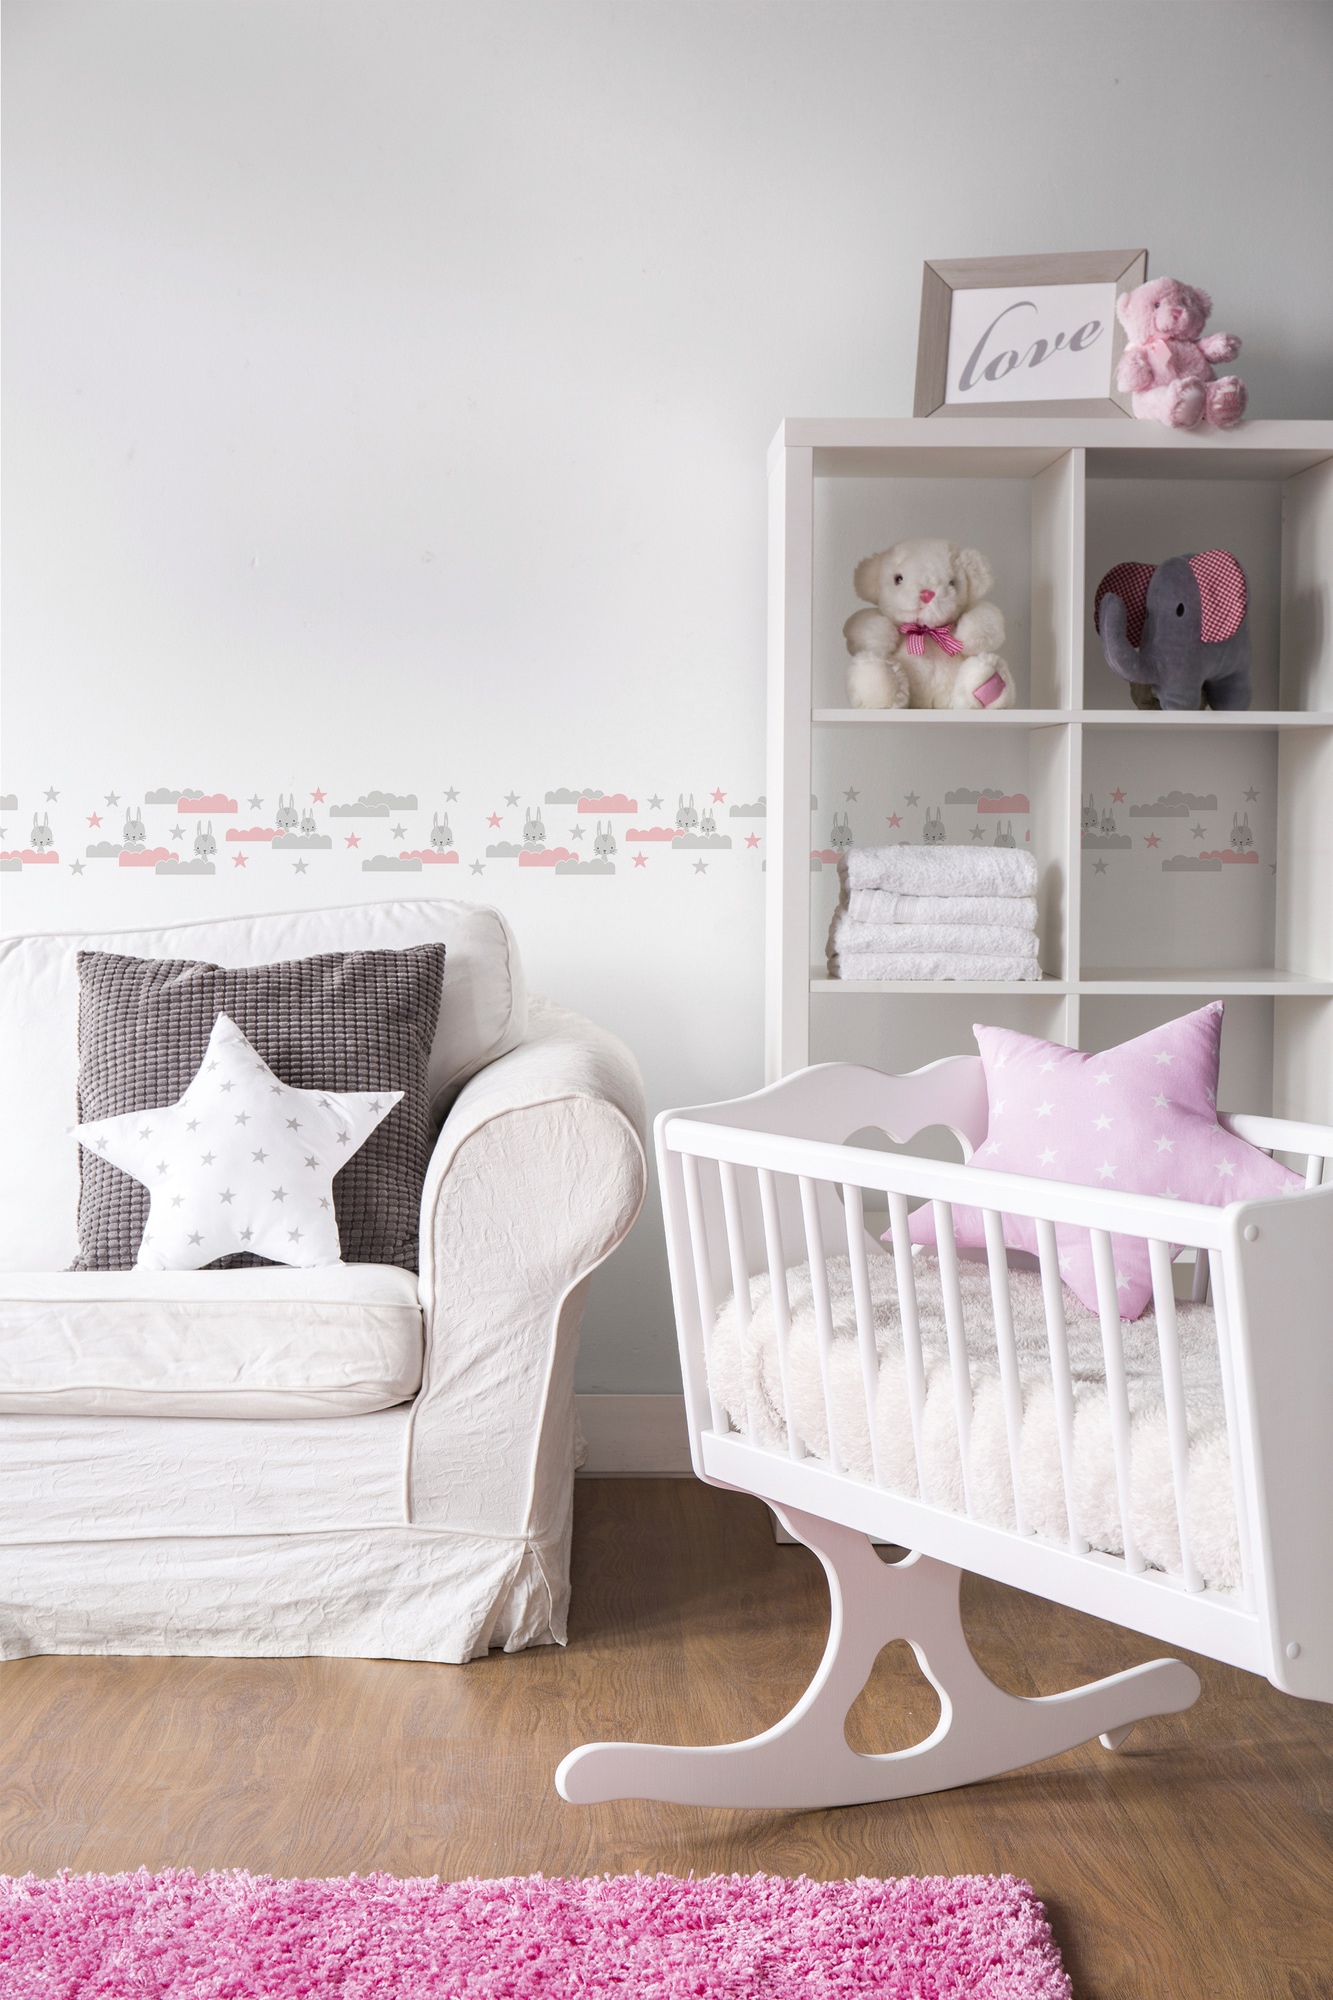 A.S. Création Bordüre »Dreamy Bunny«, Kinderzimmertapete Tapete Rosa Grau Weiß für Baby- und Kinderzimmer